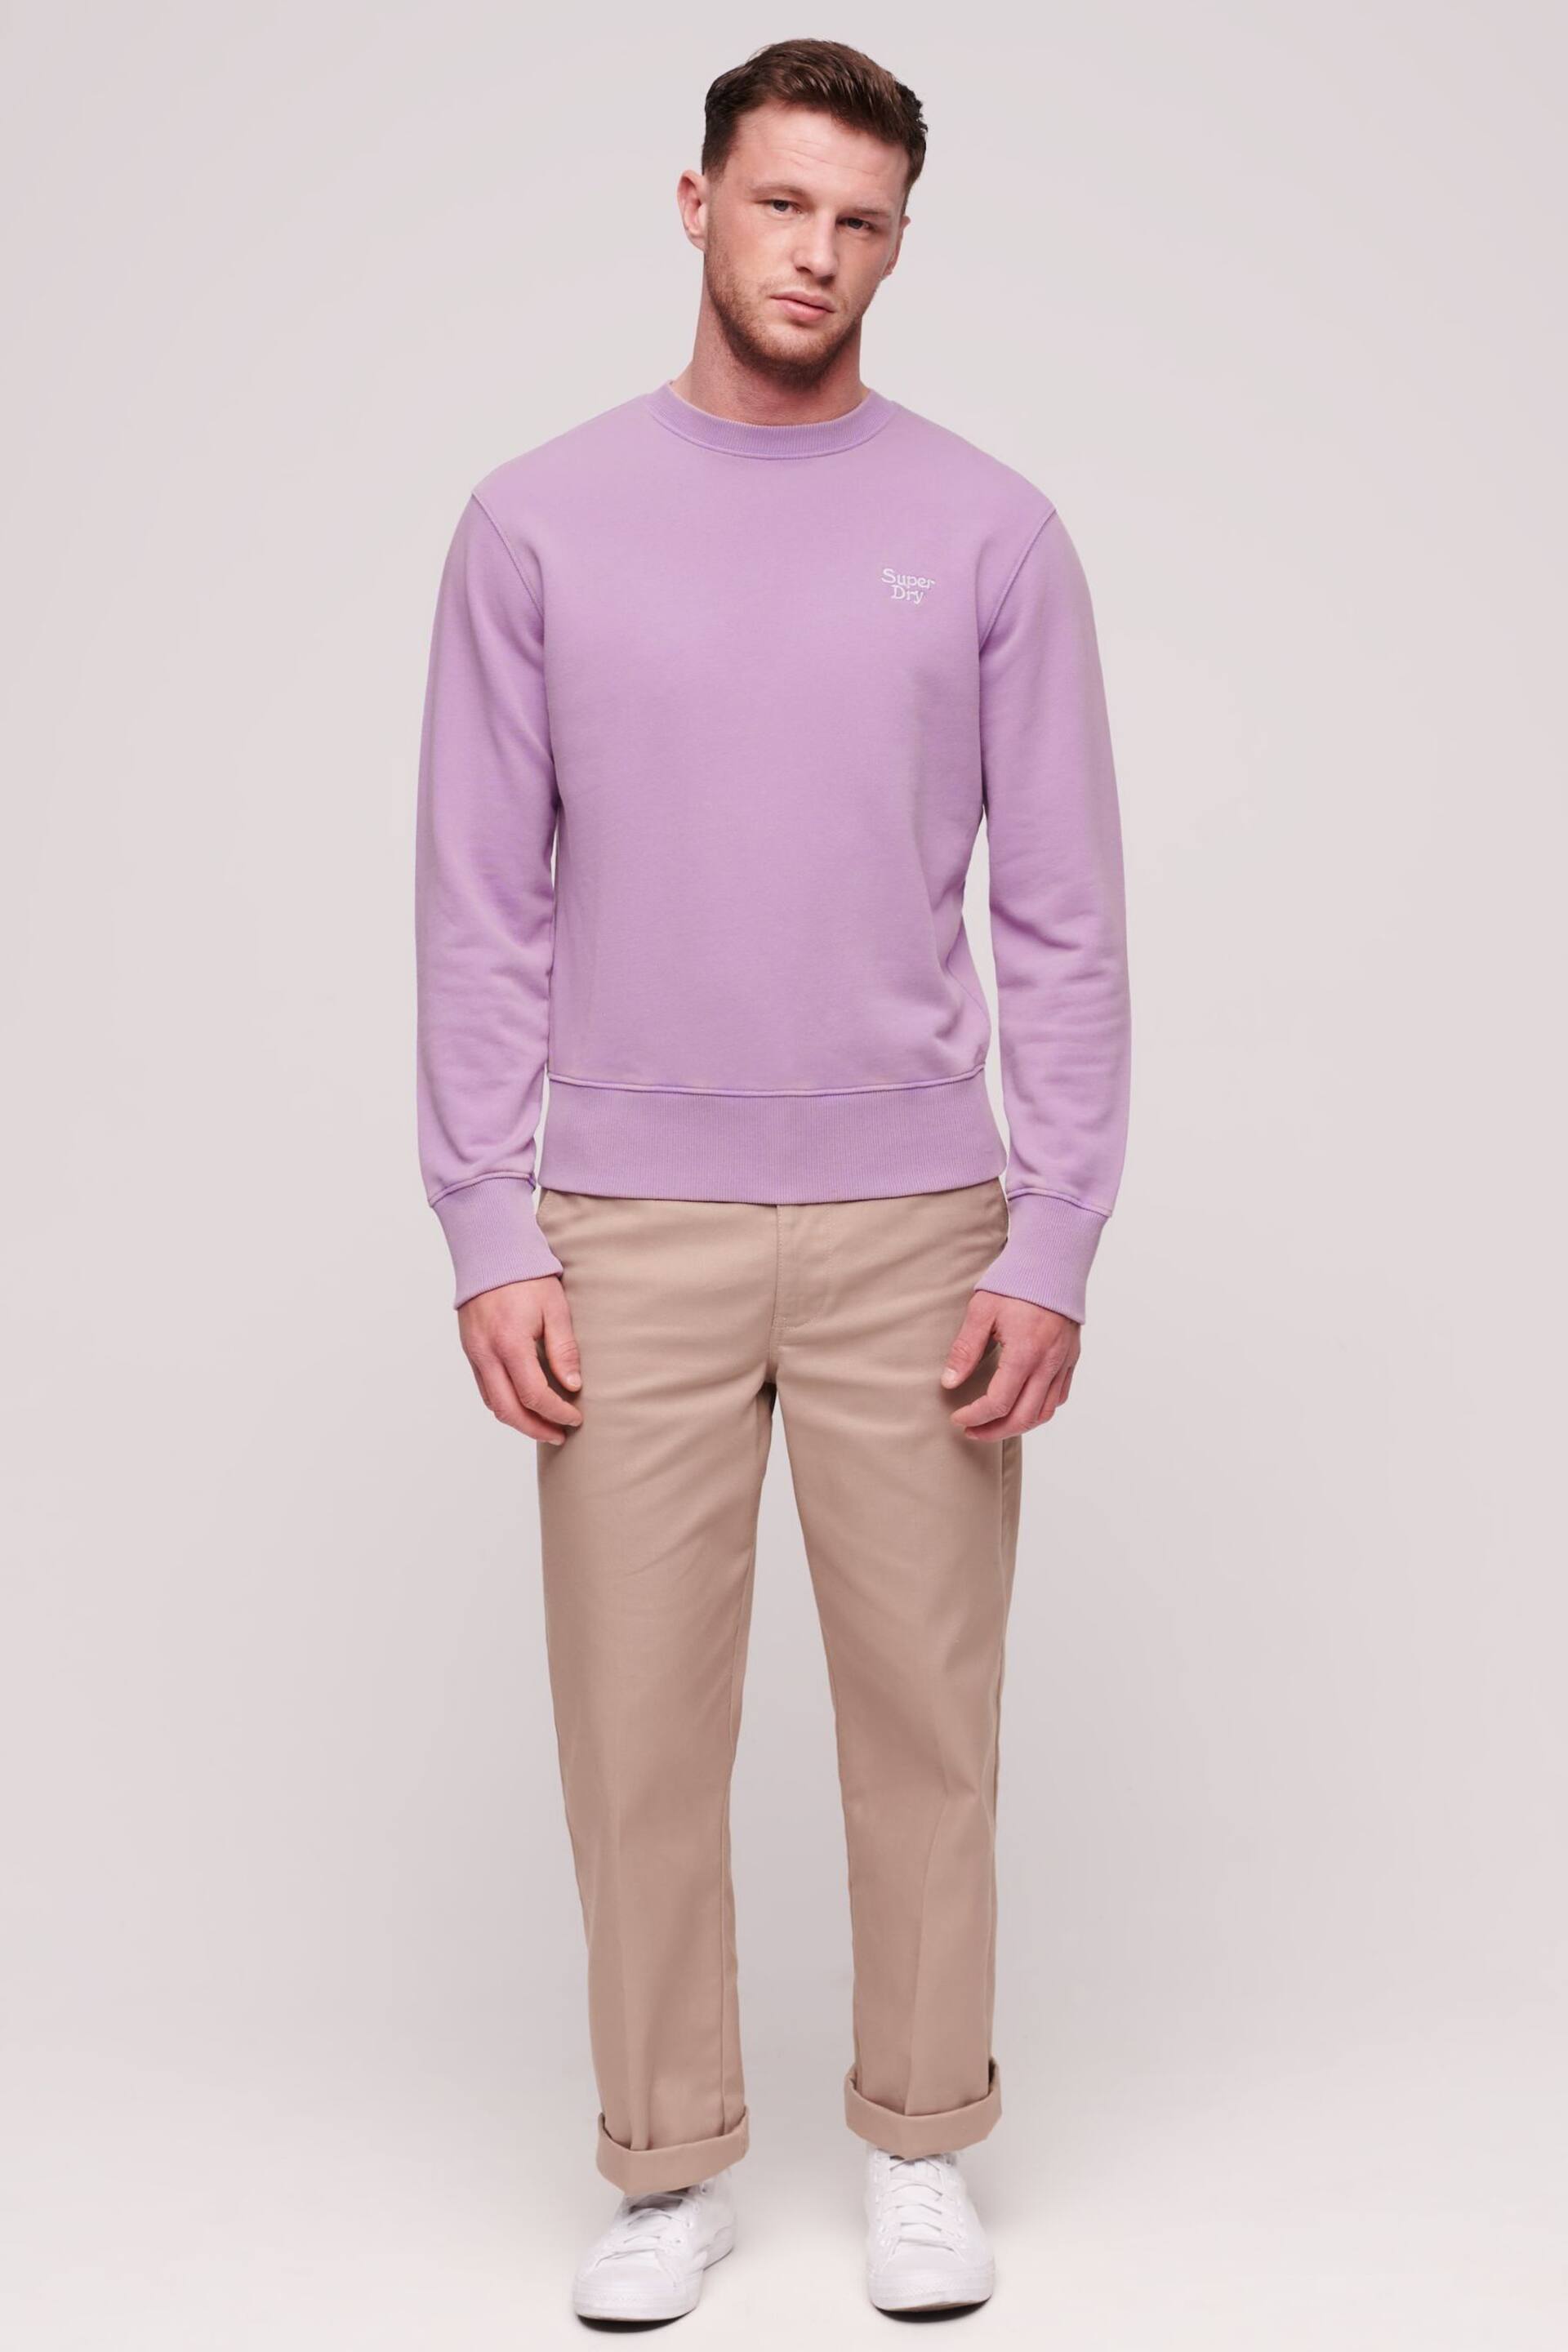 Superdry Purple Vintage Washed Sweatshirt - Image 2 of 3